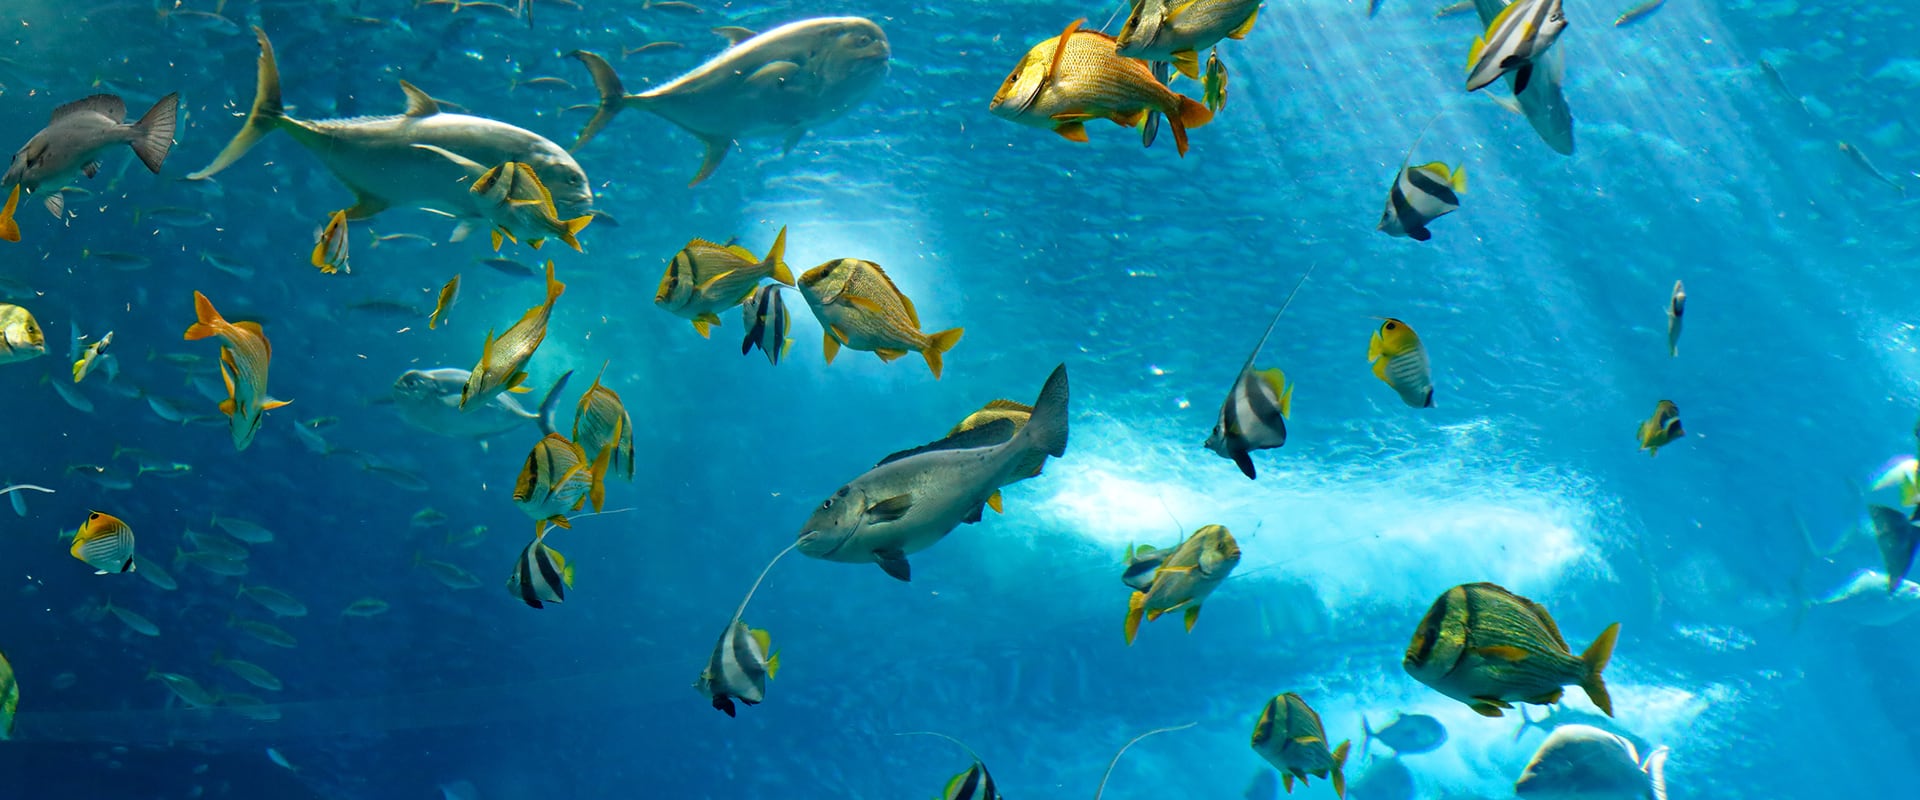 5 Crociere subacquee in Cuba - LiveAboard.com